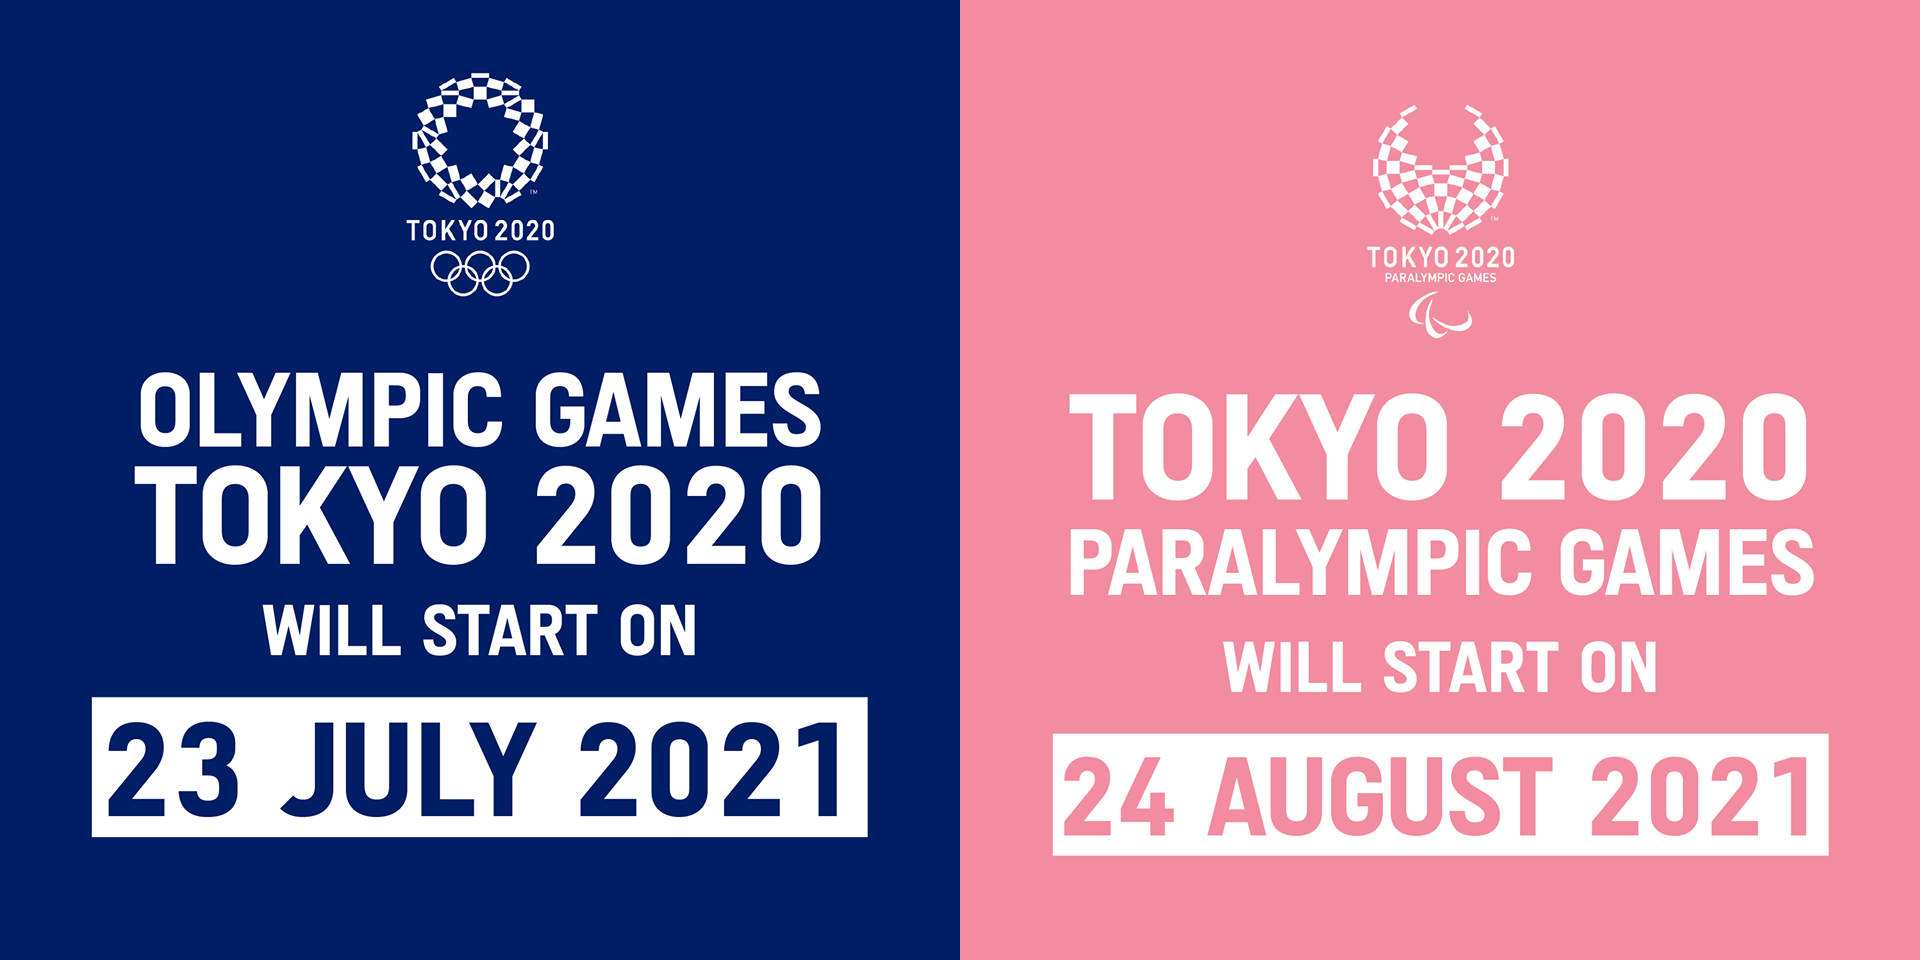 Olympic games tokyo 2020 badminton